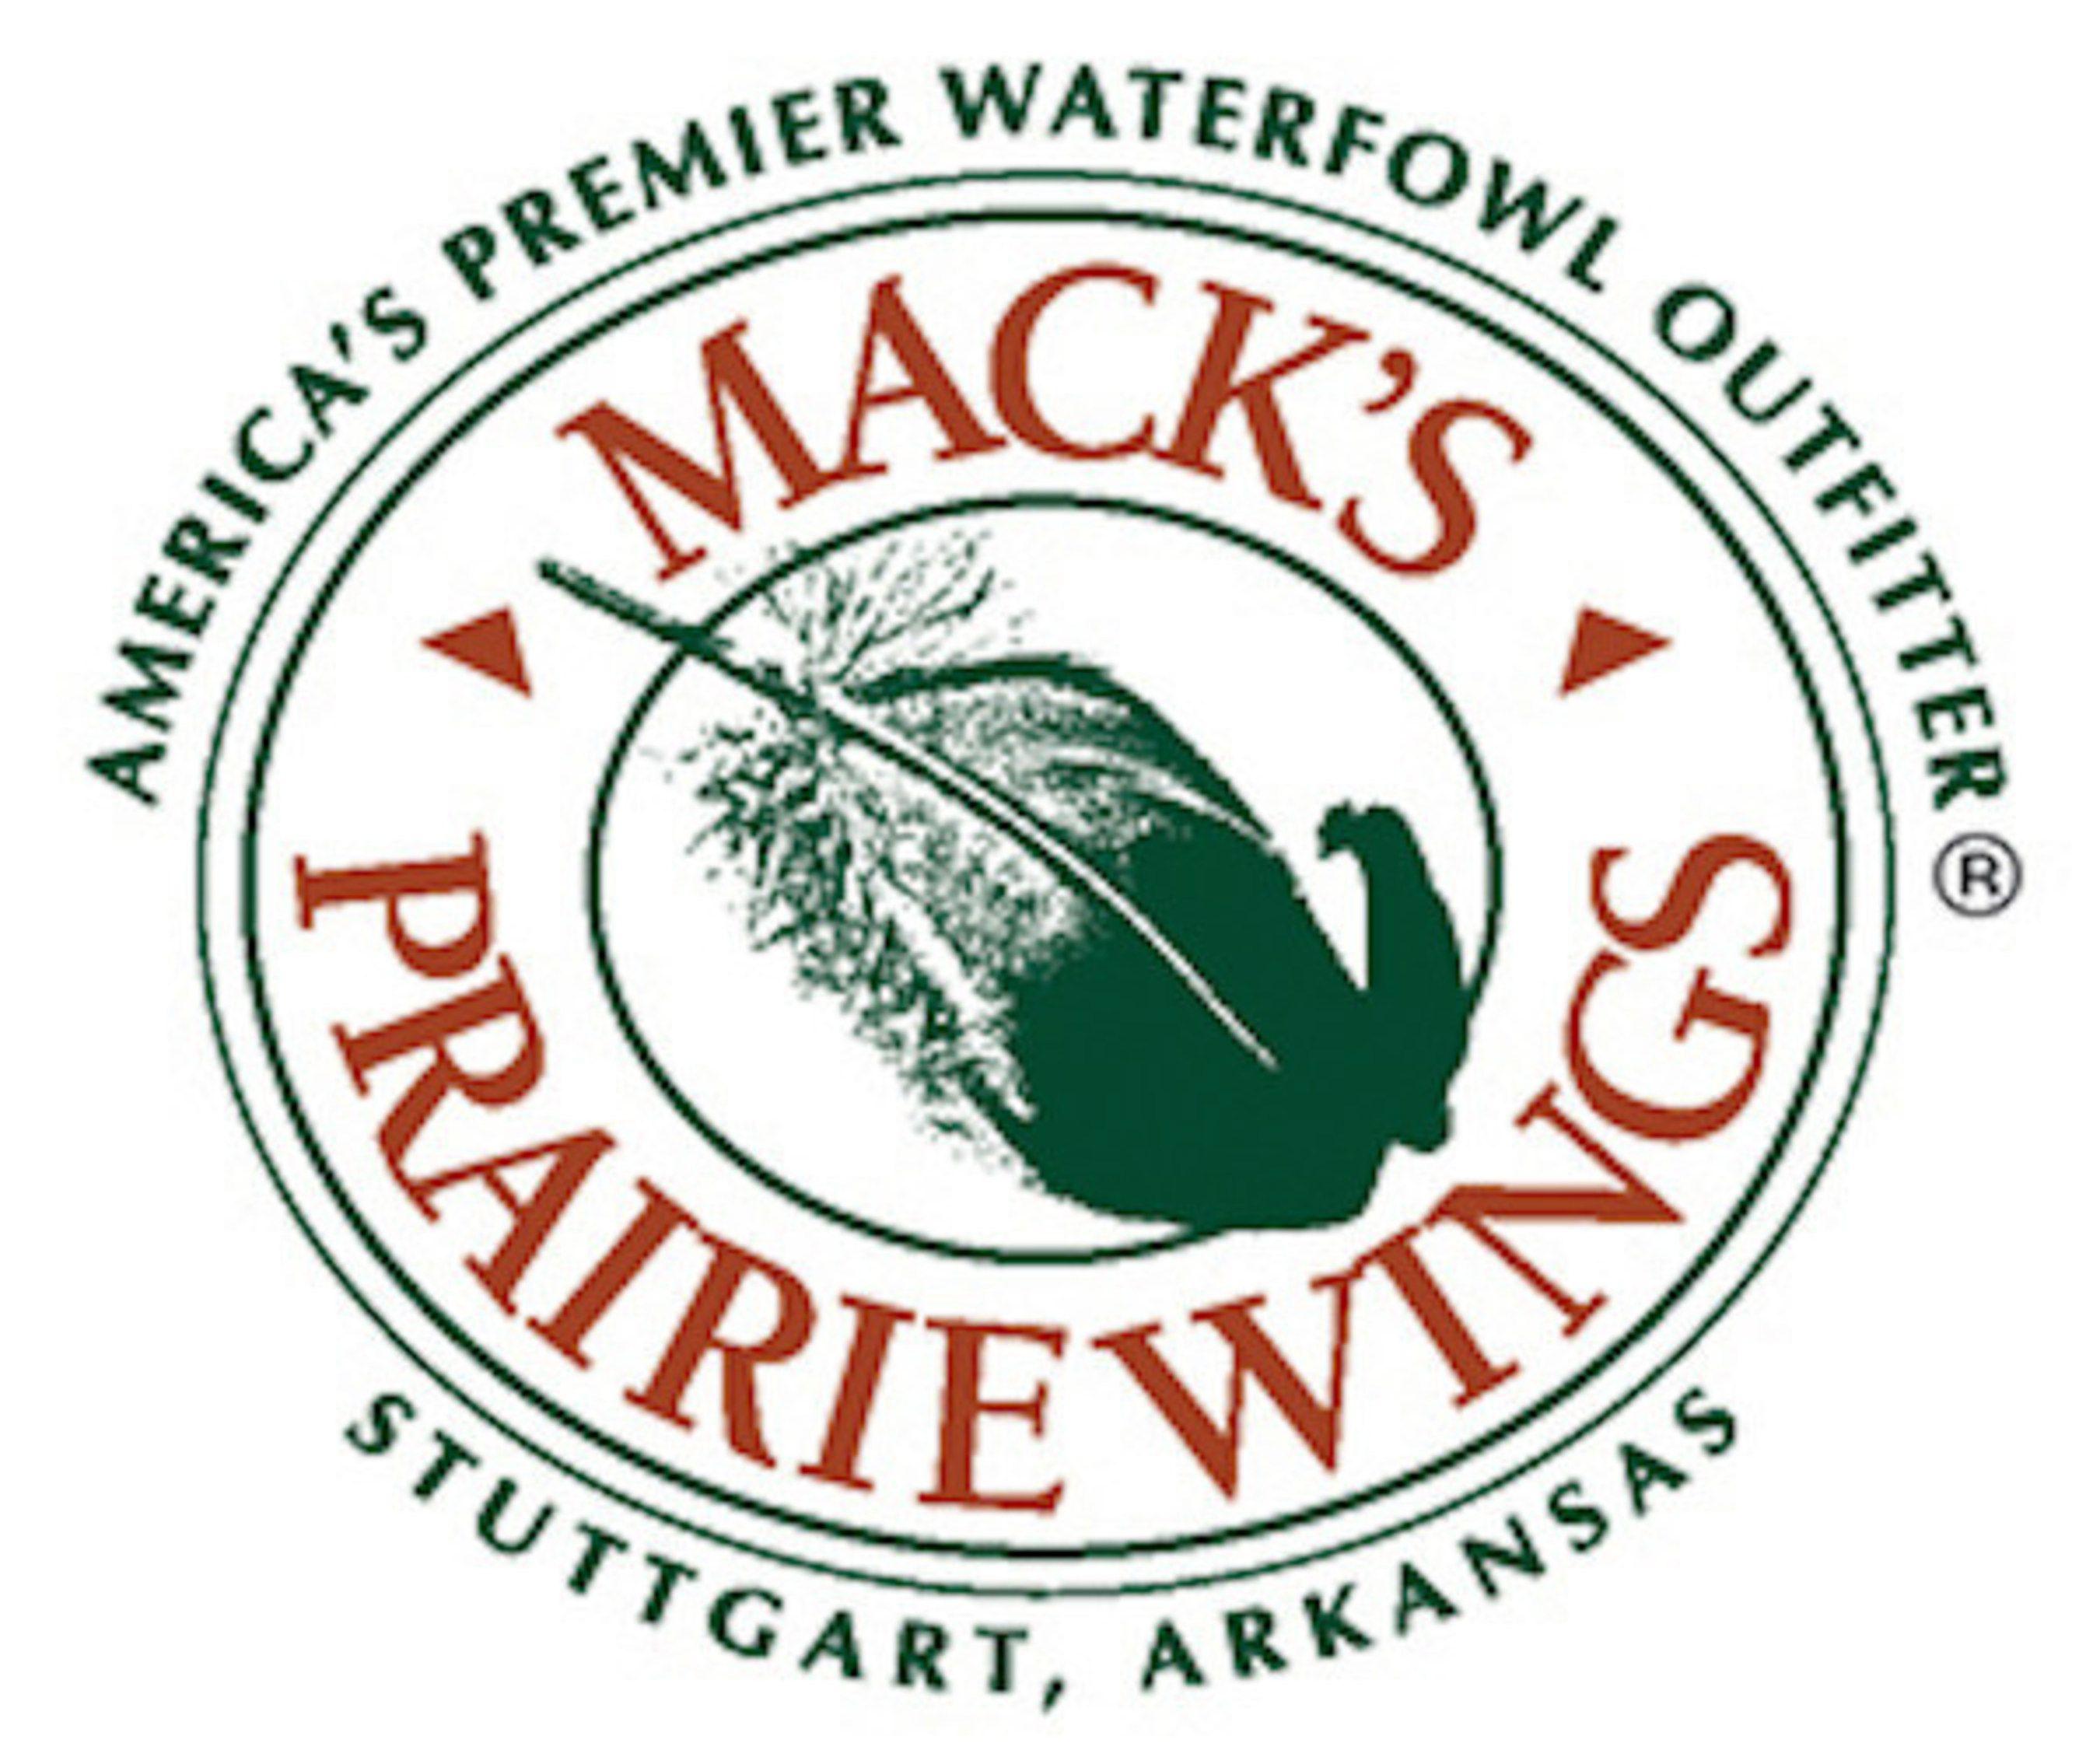 Mack's Logo - SG 20 Wader Repair Kit Now Available At Mack's Prairie Wings